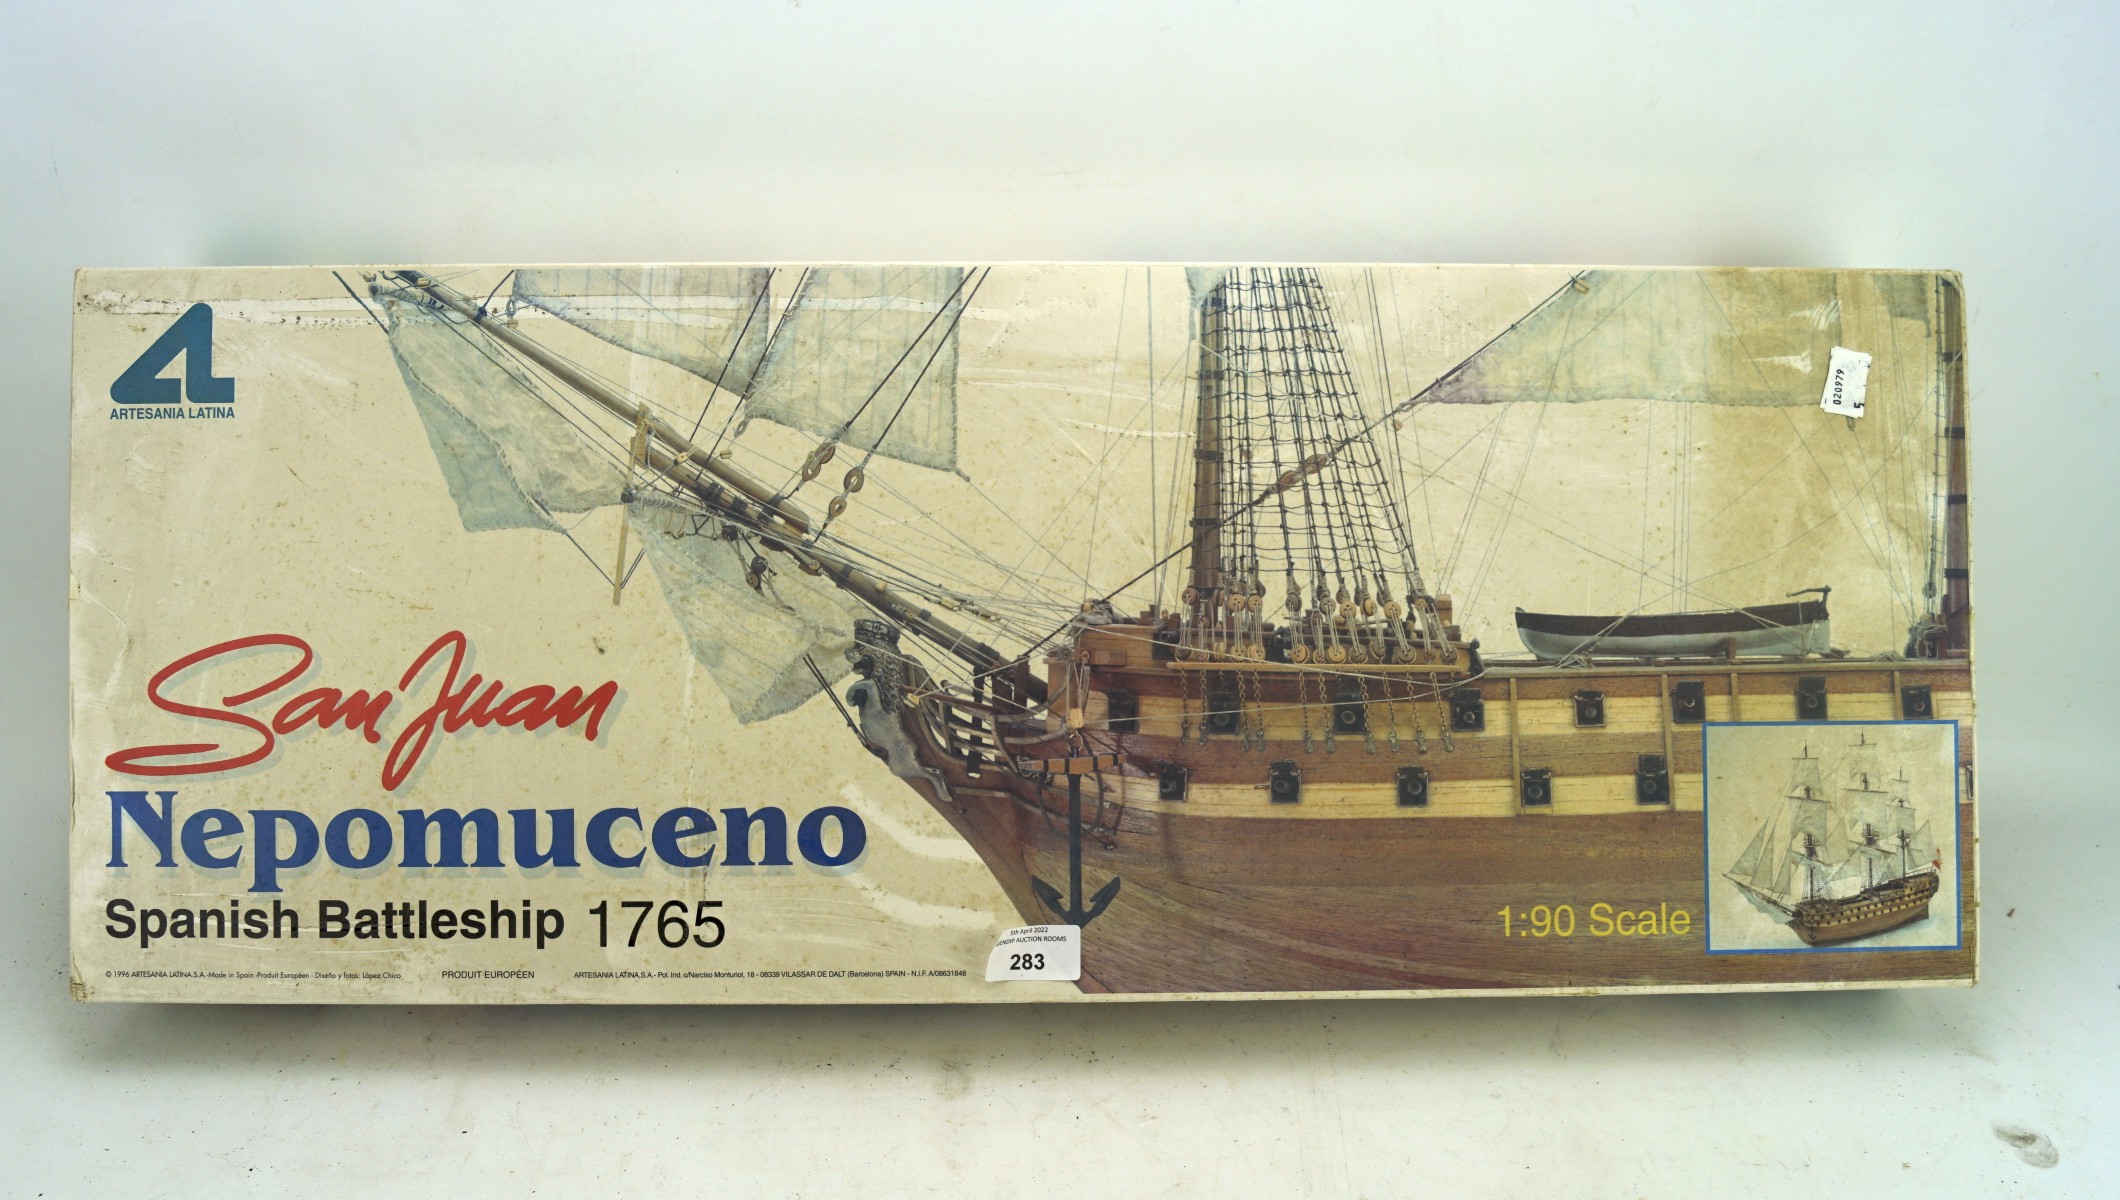 A model kit of the 18th century Spanish battleship Nepmomuceno, 1:90 scale,